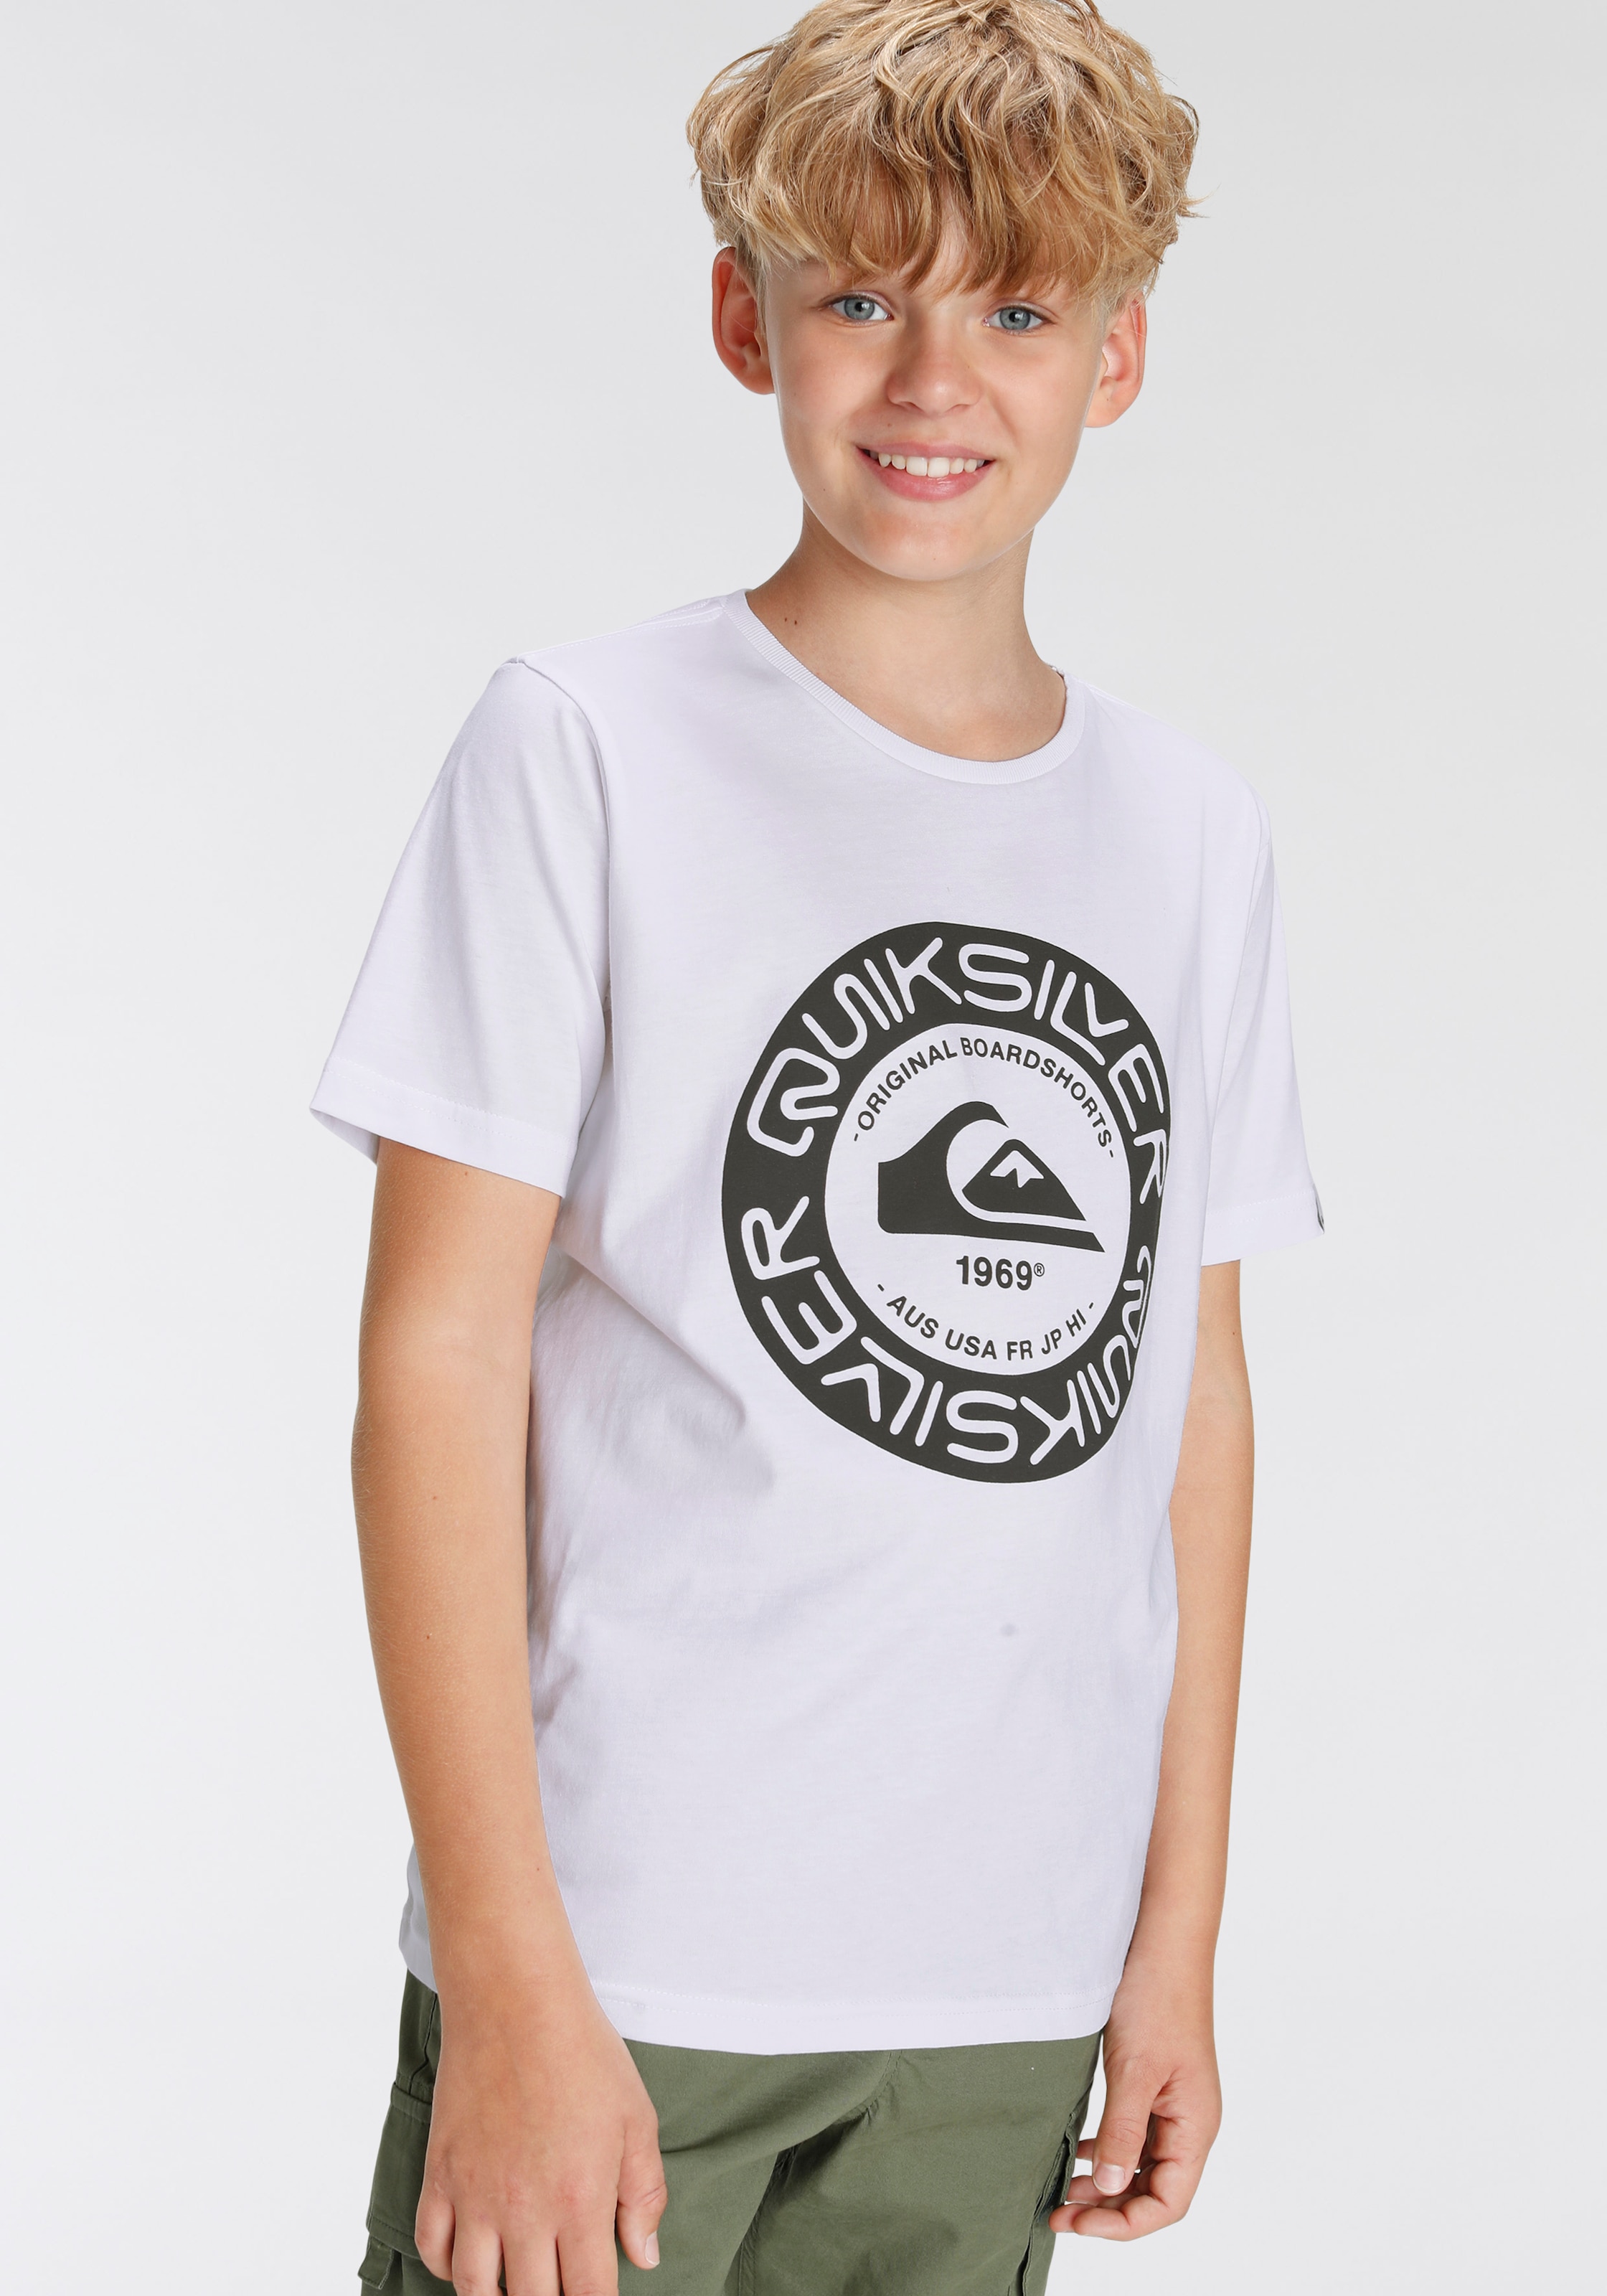 »Jungen 2 T-Shirt tlg.) (Packung, mit Logodruck«, bei Quiksilver Doppelpack